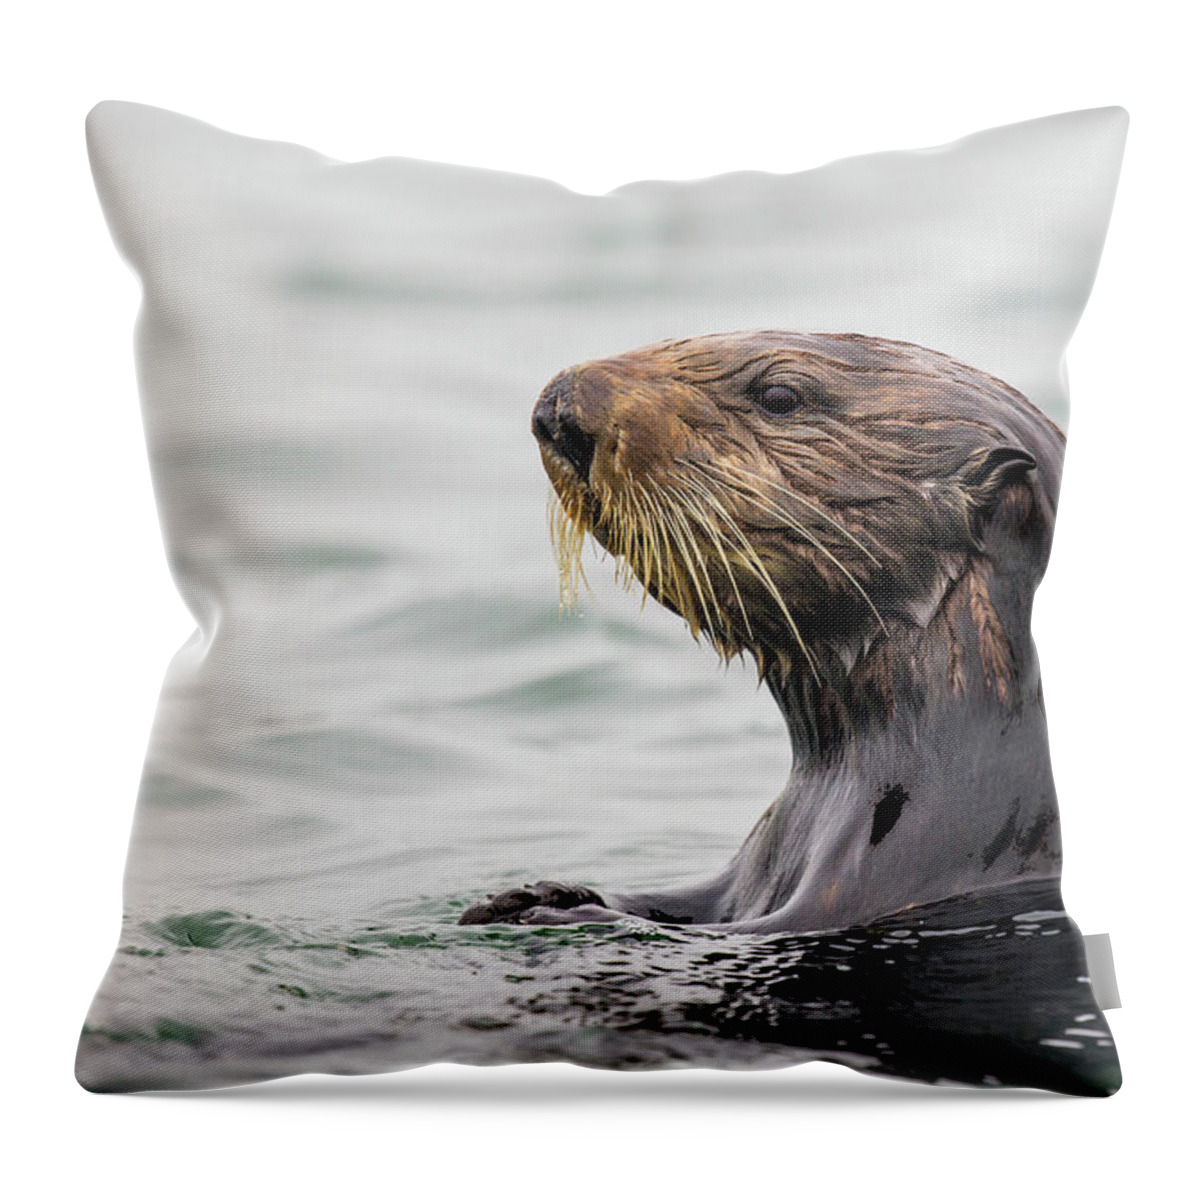 Sebastian Kennerknecht Throw Pillow featuring the photograph Sea Otter In Elkhorn Slough by Sebastian Kennerknecht